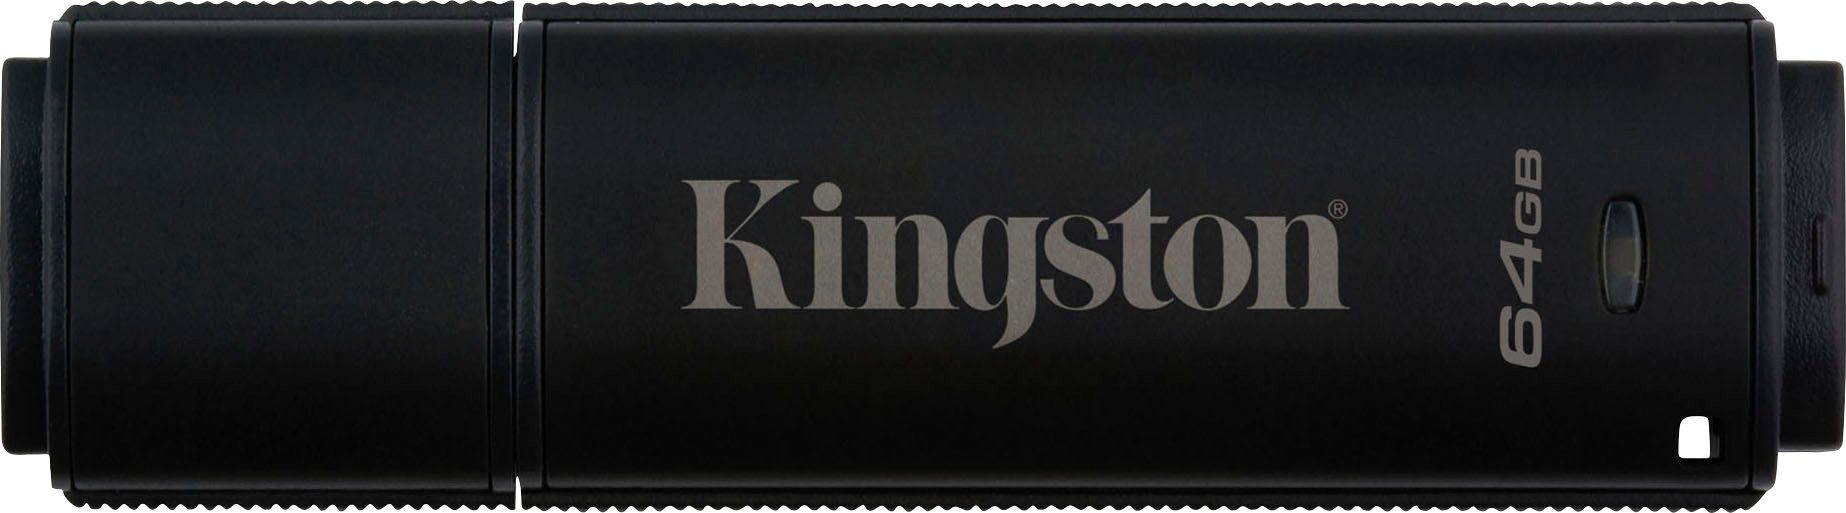 Kingston DT4000G2 64GB USB-Stick (USB 3.0, Lesegeschwindigkeit 250 MB/s)